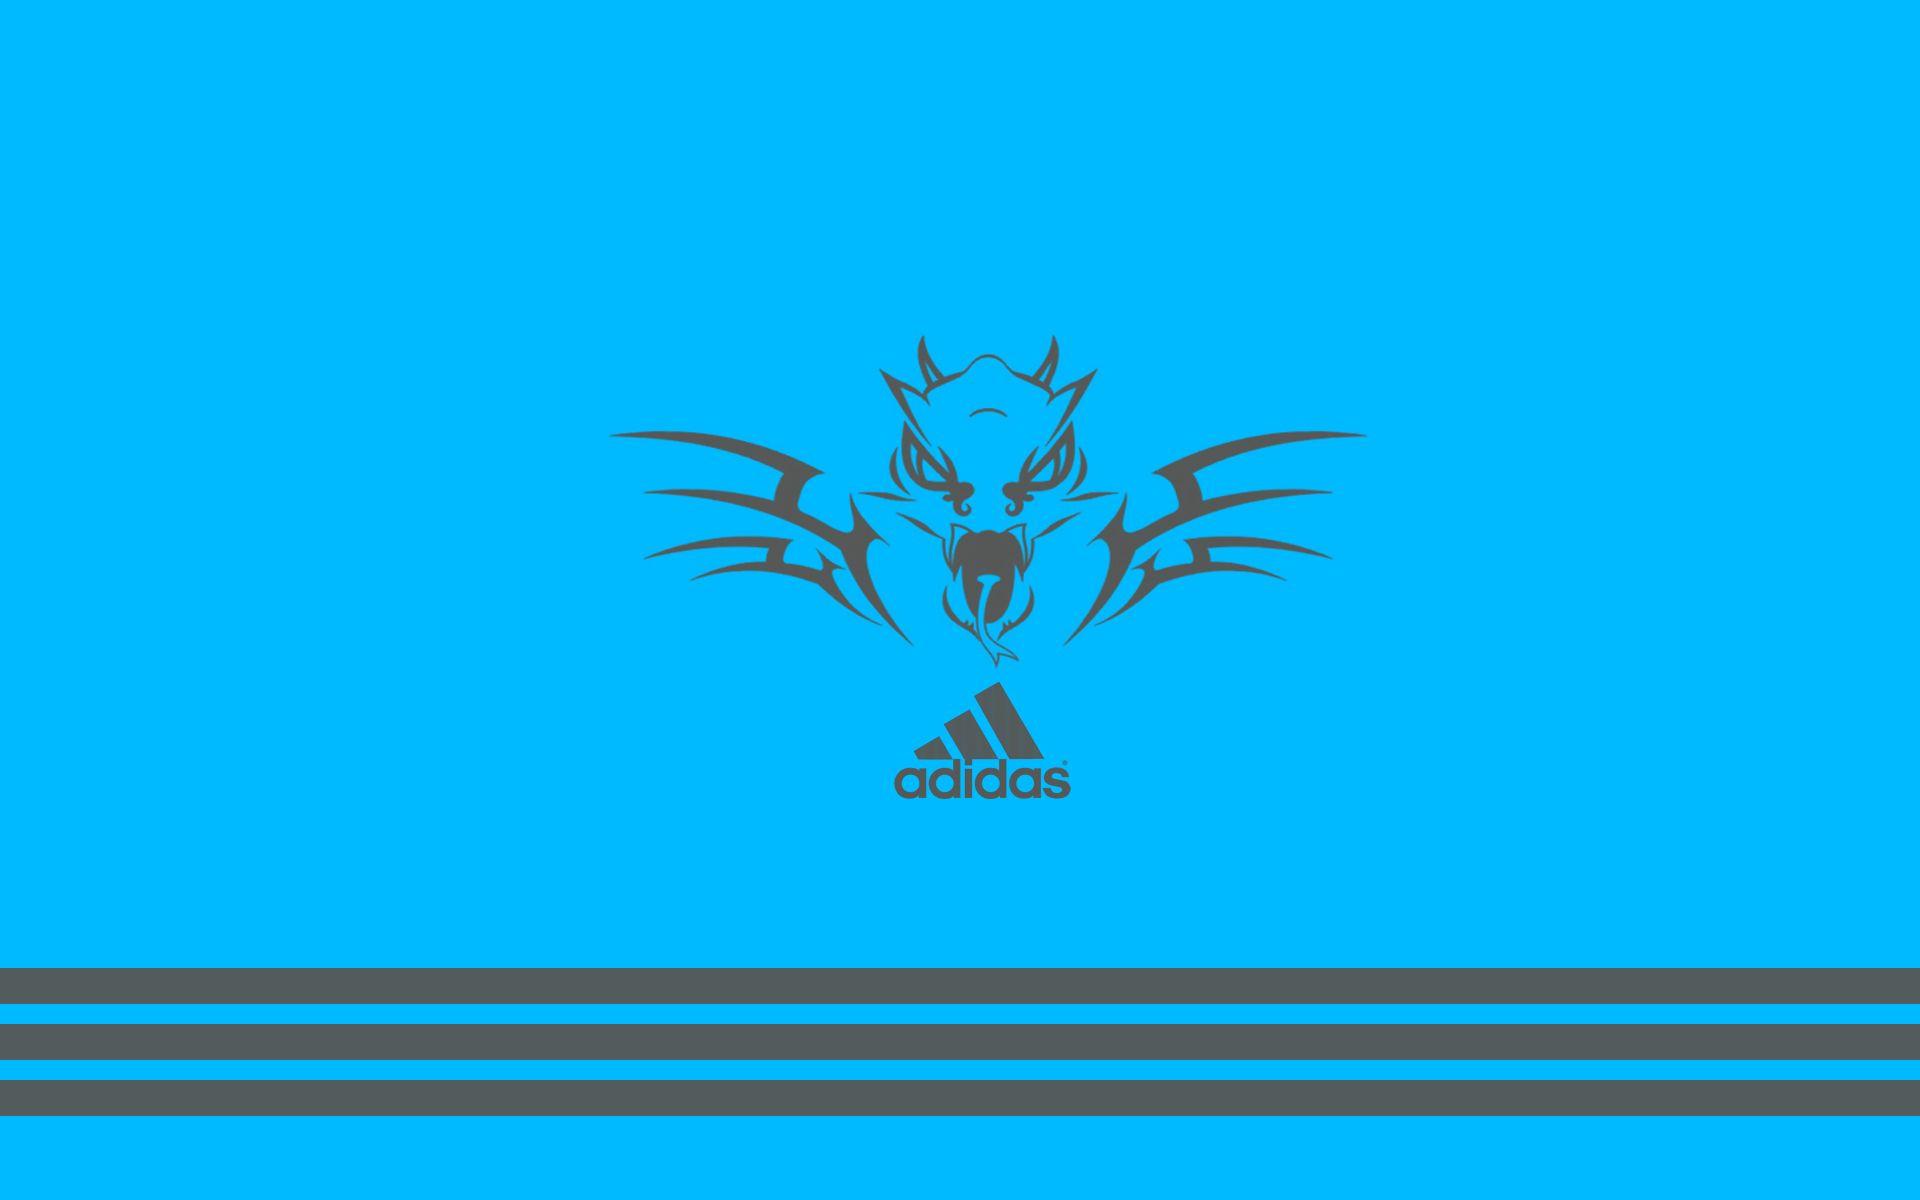 Adidas, icon, firm wallpaper desktop background